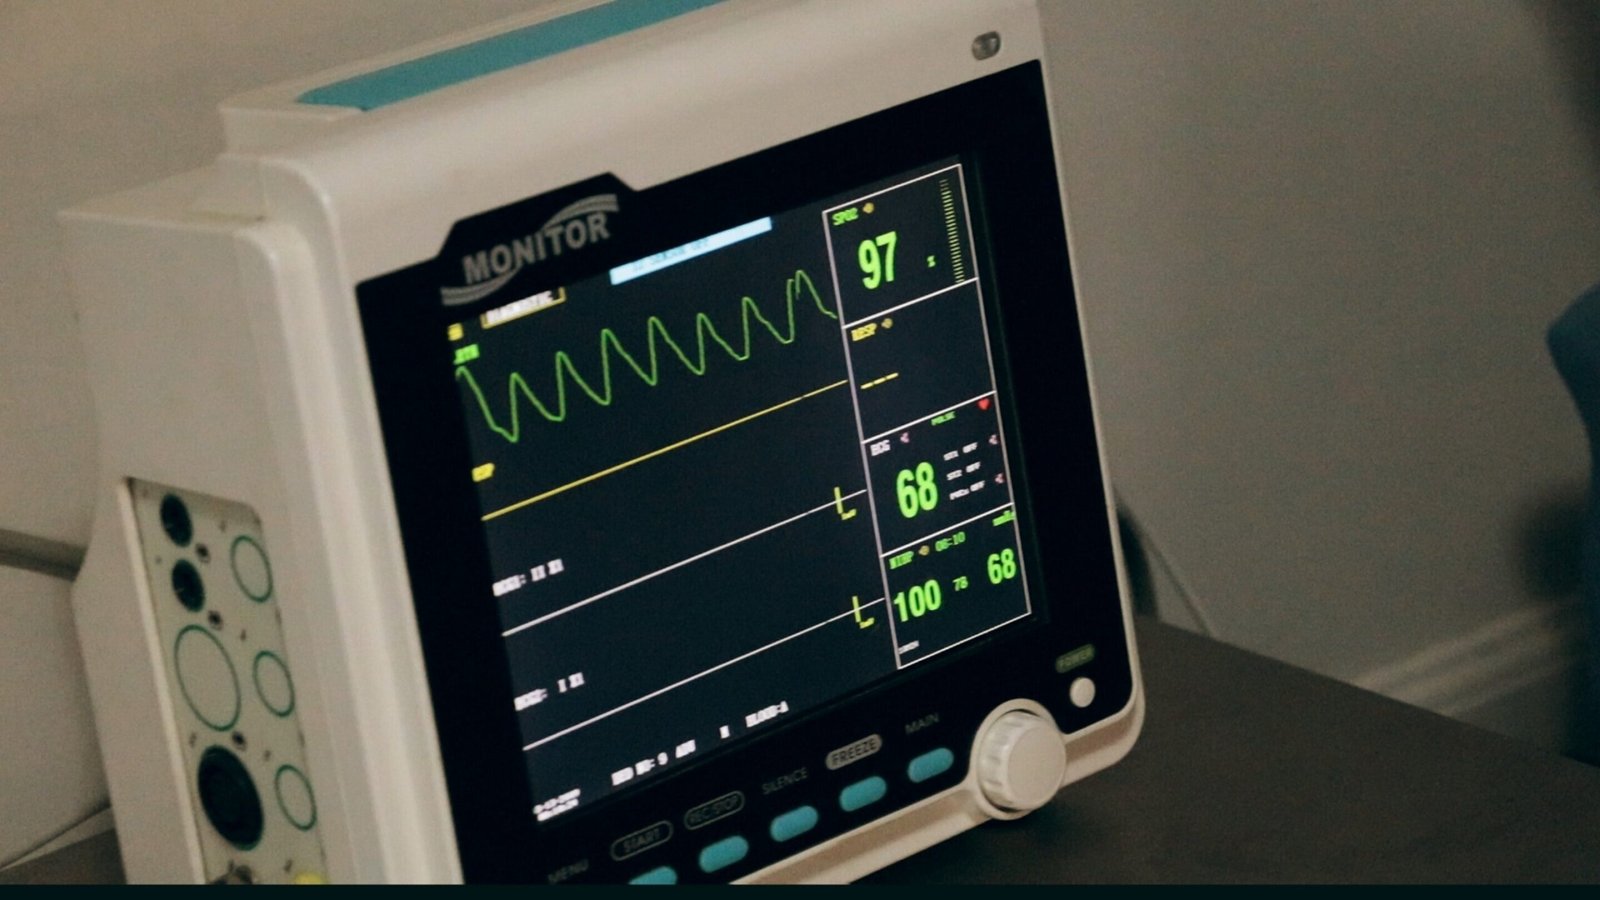 Vigilant monitoring is needed to manage cardiac risks in patients using antipsychotics doctors say